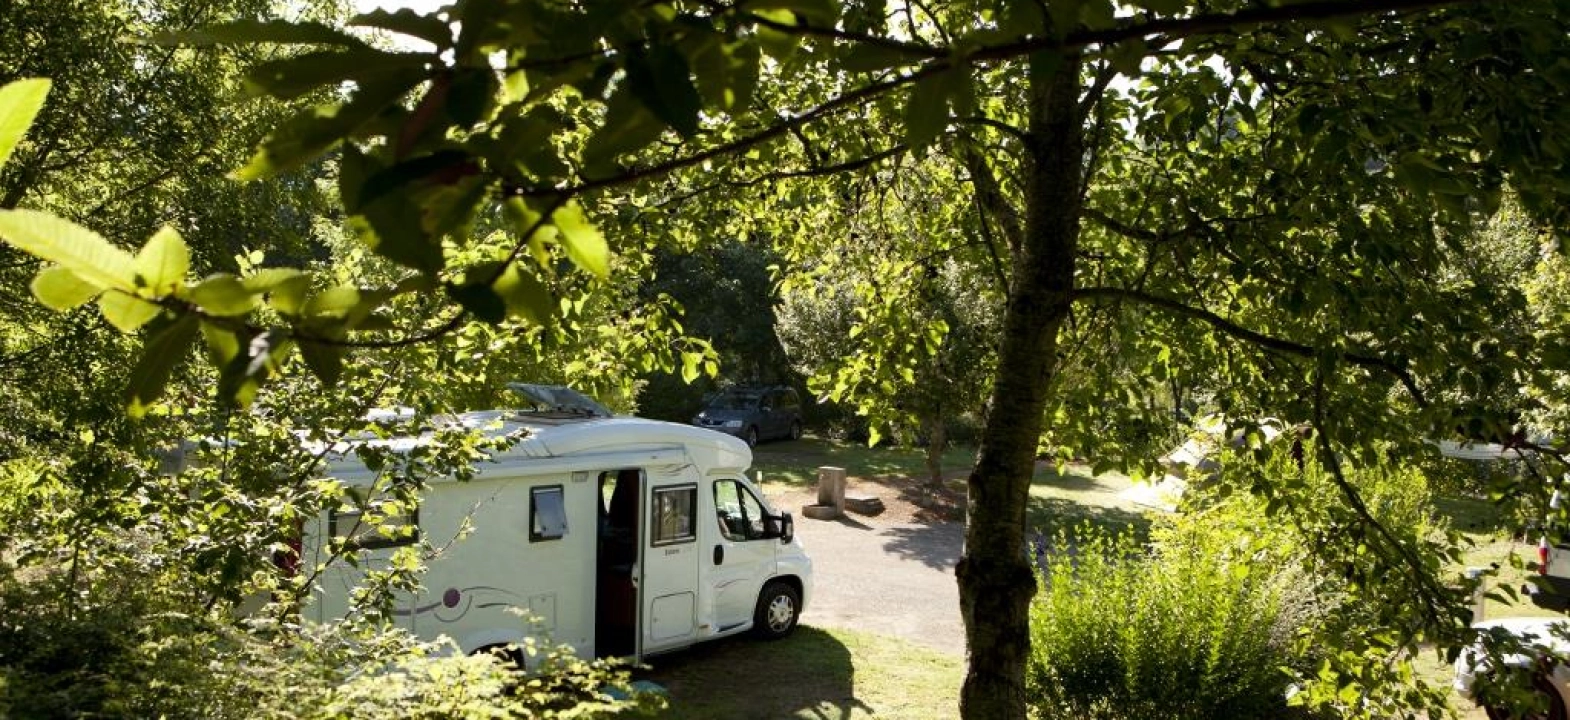 Pitches for caravan/camper van/tent